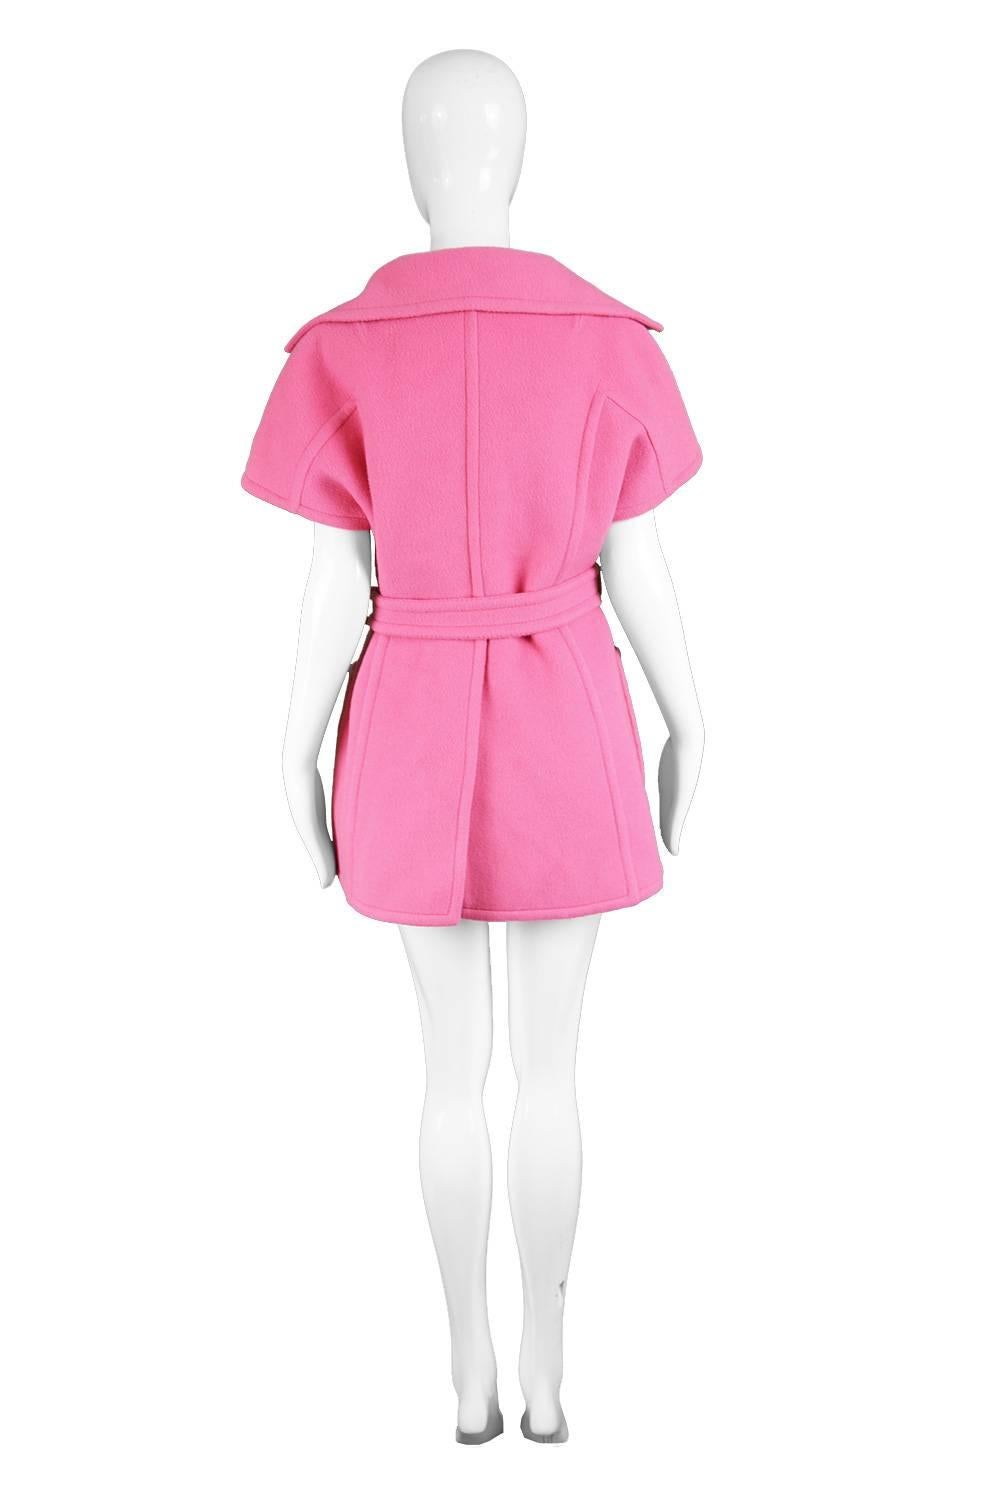 Jean Charma Paris Vintage Couture Minimalist Bubblegum Pink Wool Jacket, 1960s  2